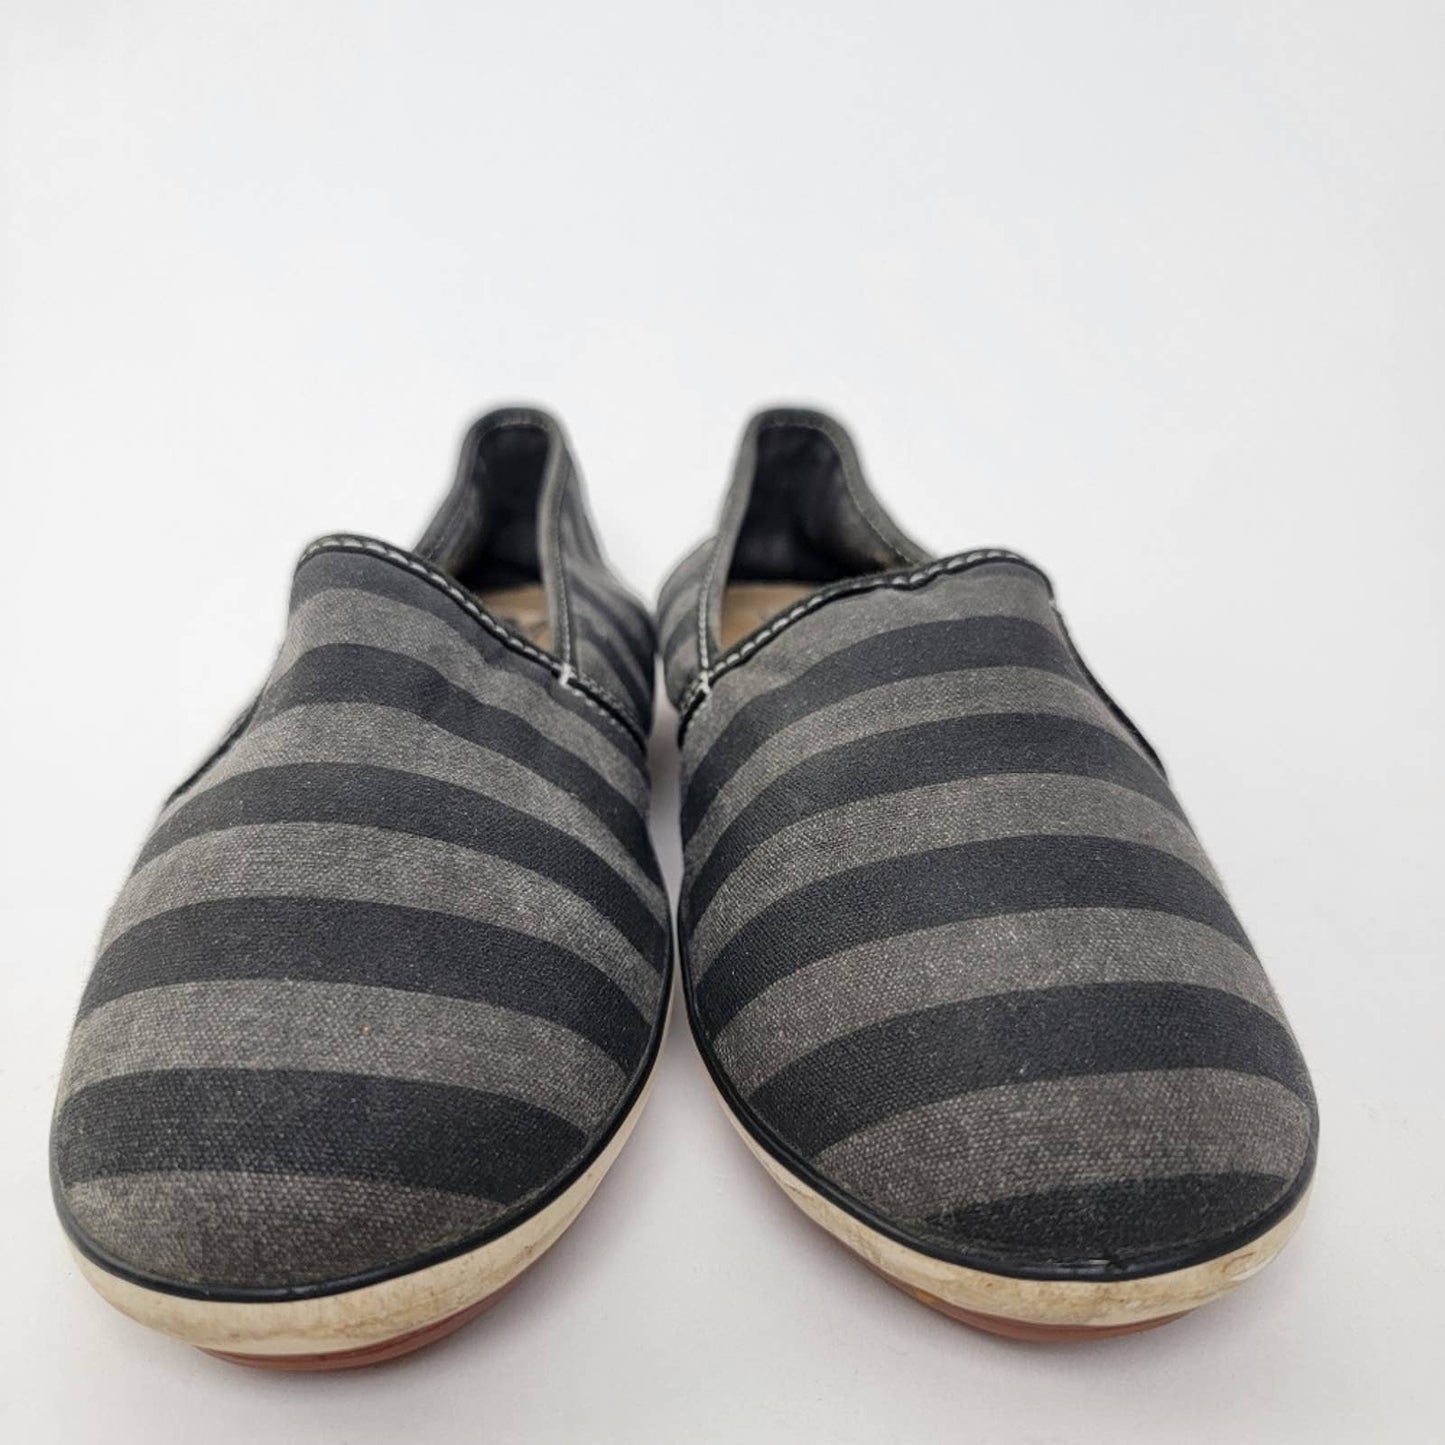 Vans Canvas Striped Slip On Ballet Shoes - 7